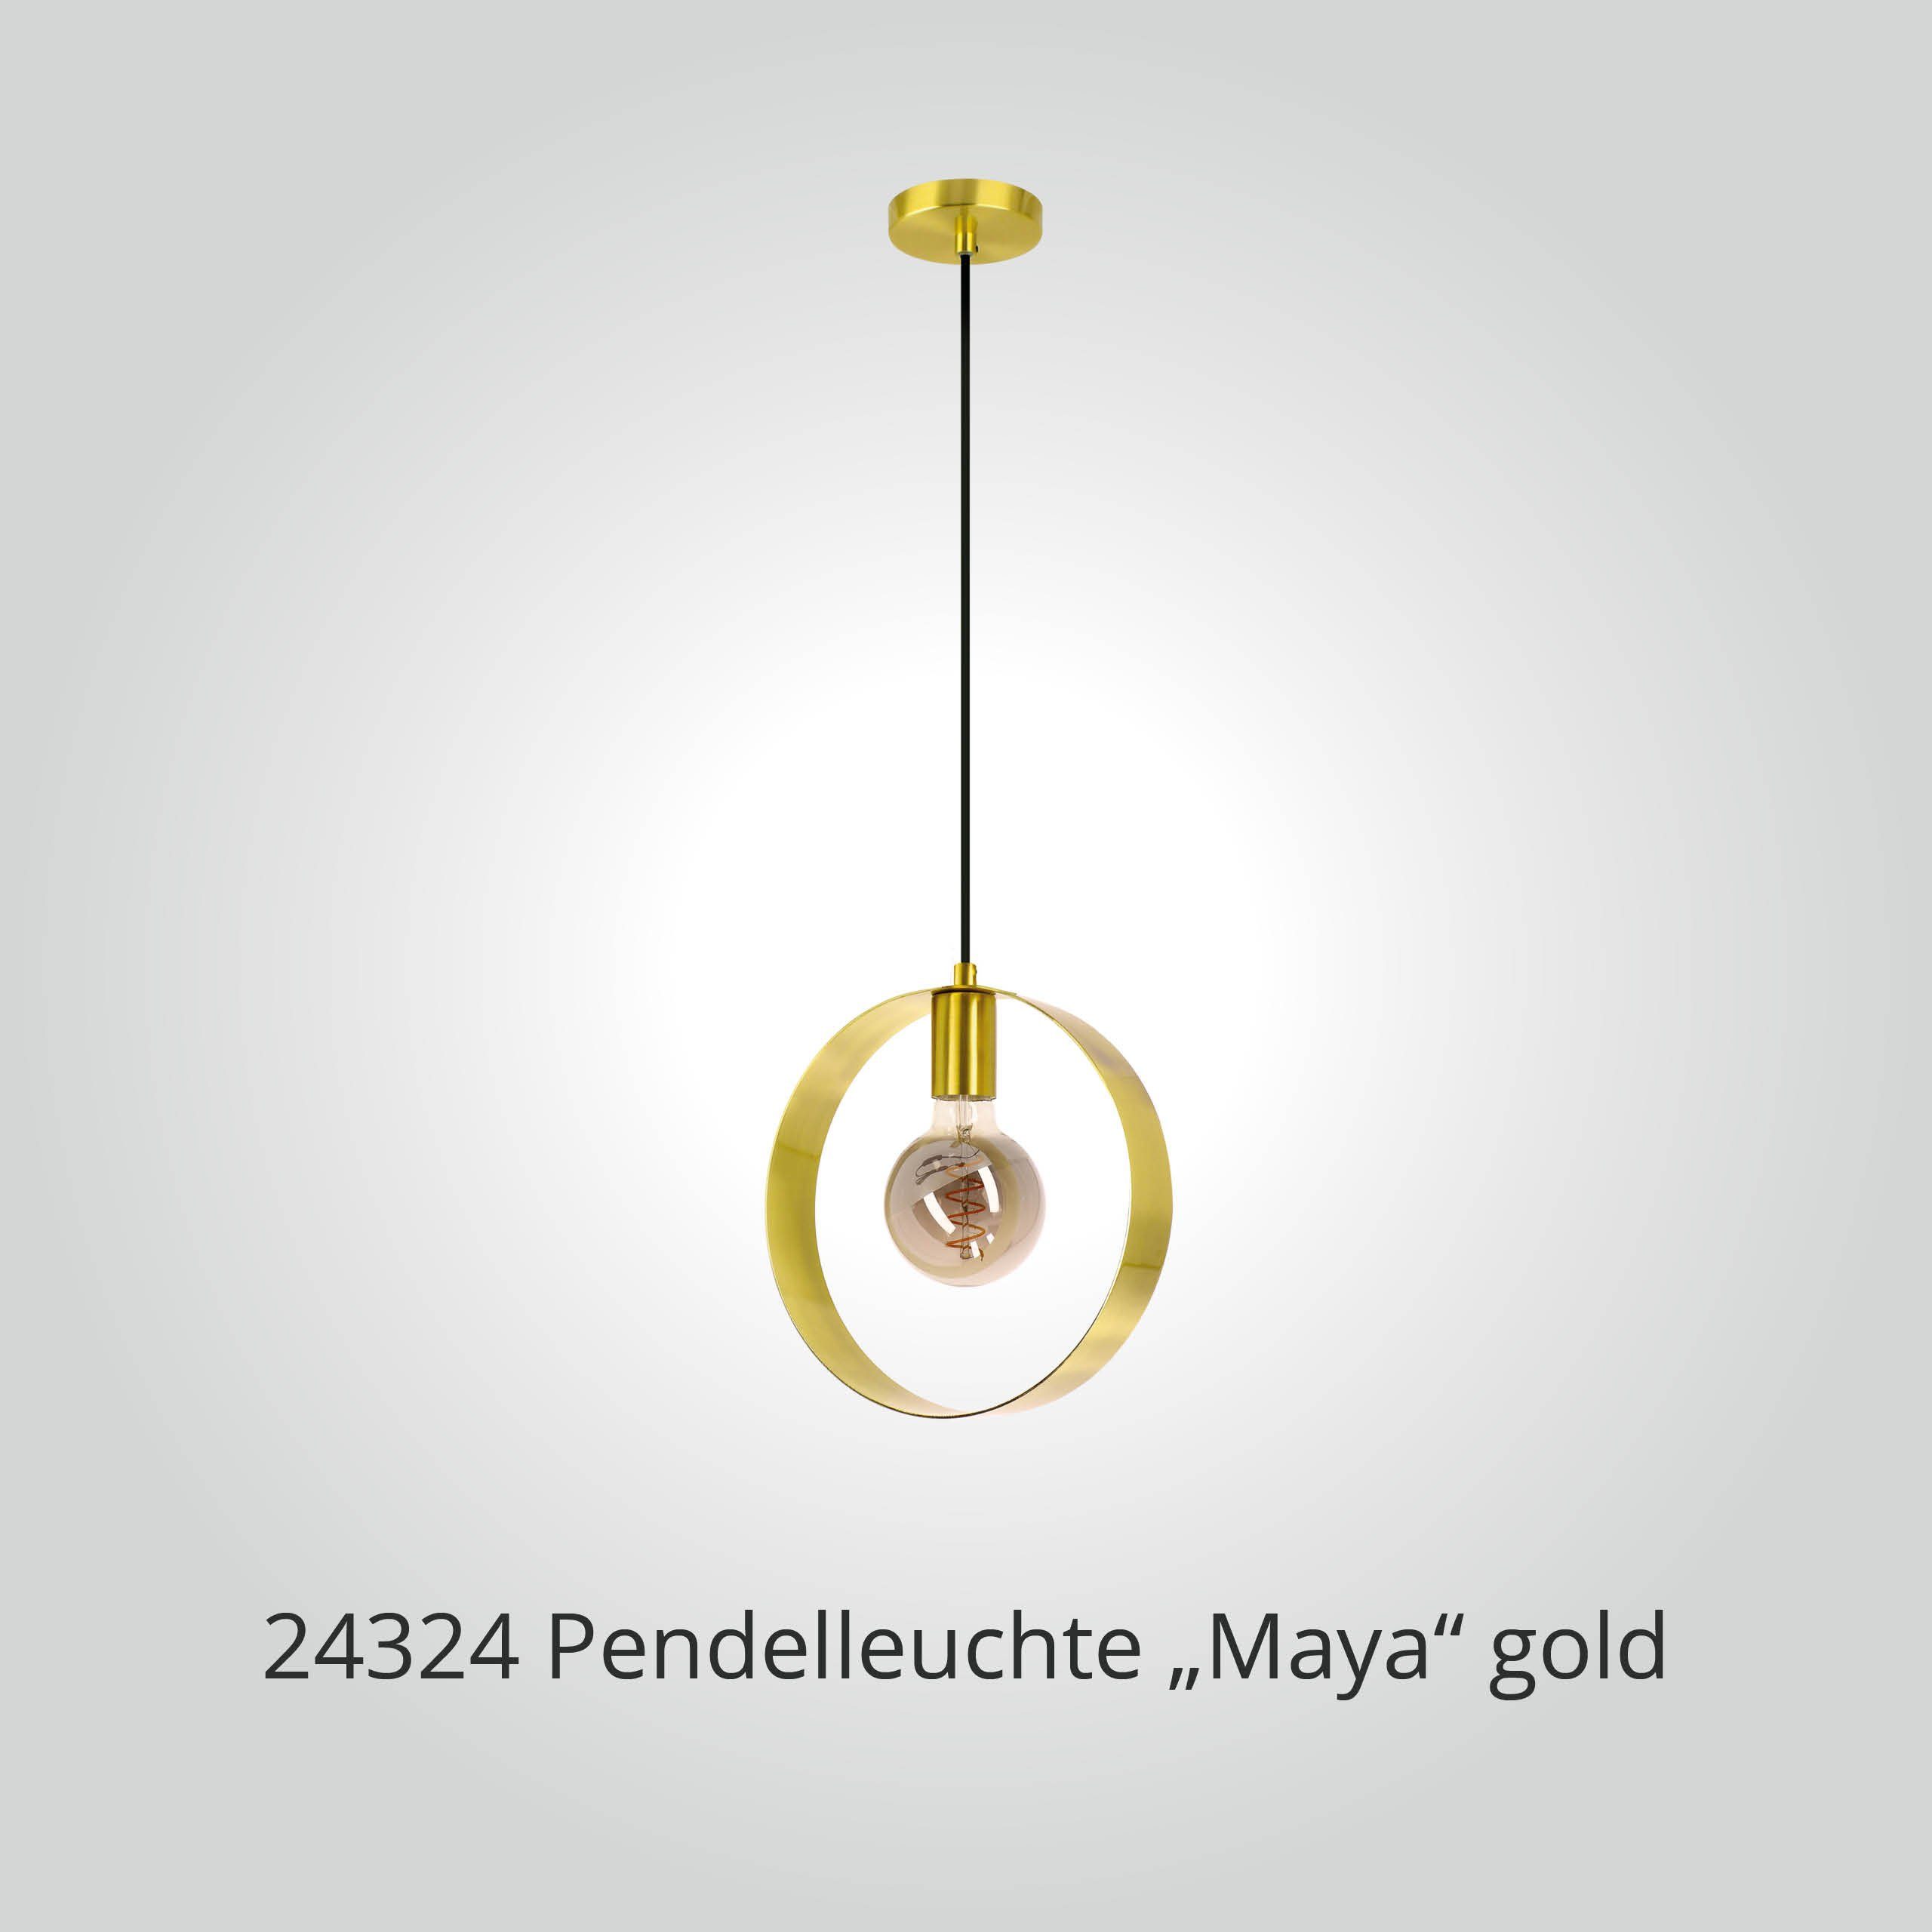 LED Universum LED Pendelleuchte gold, 25cm, "Maya" E27 max 40W Fassung, Ø